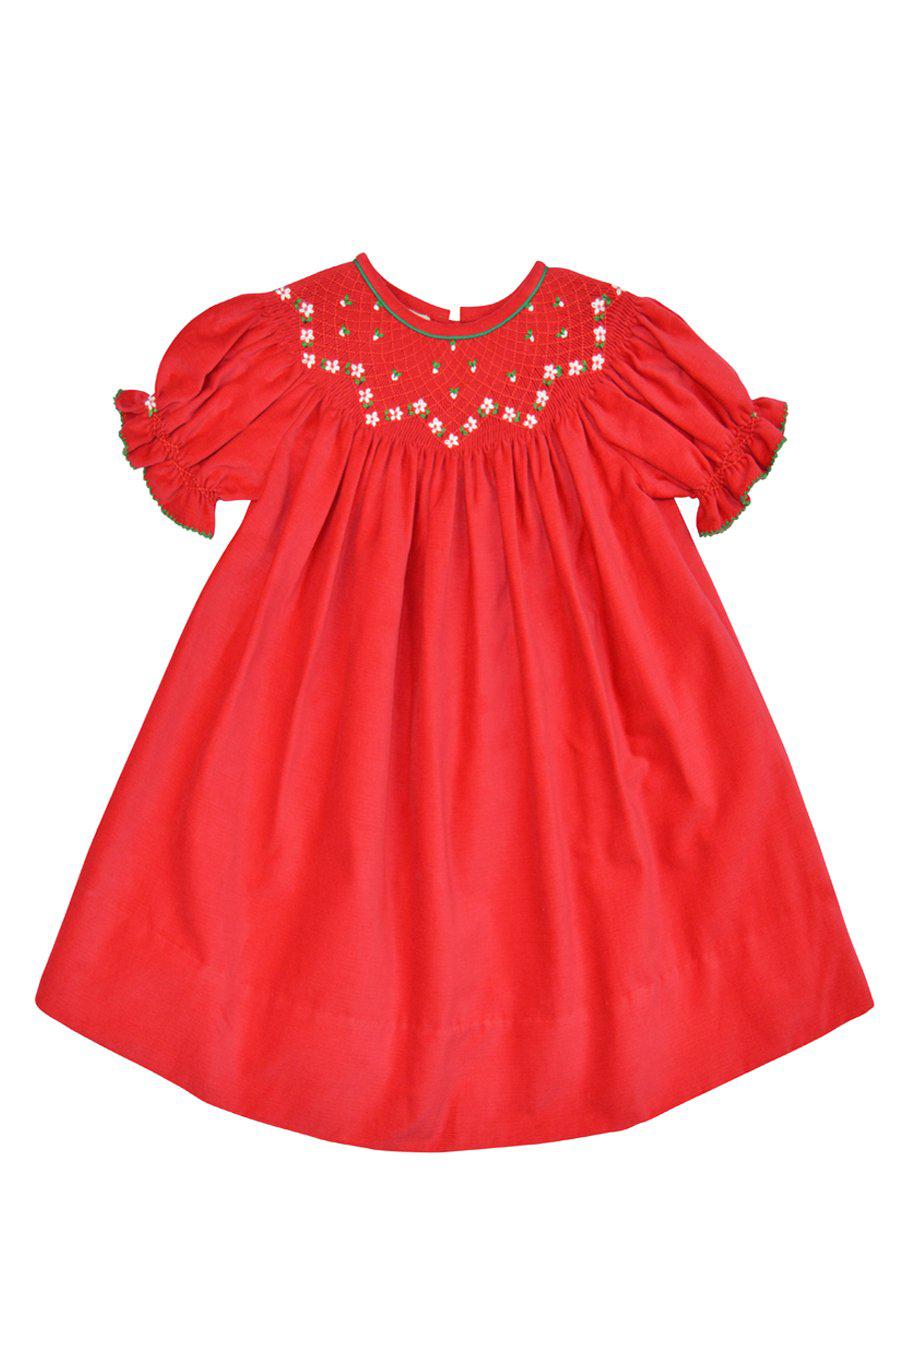 Heather Red Cotton Smocked Bishop dress - Little Threads Inc. Children's Clothing